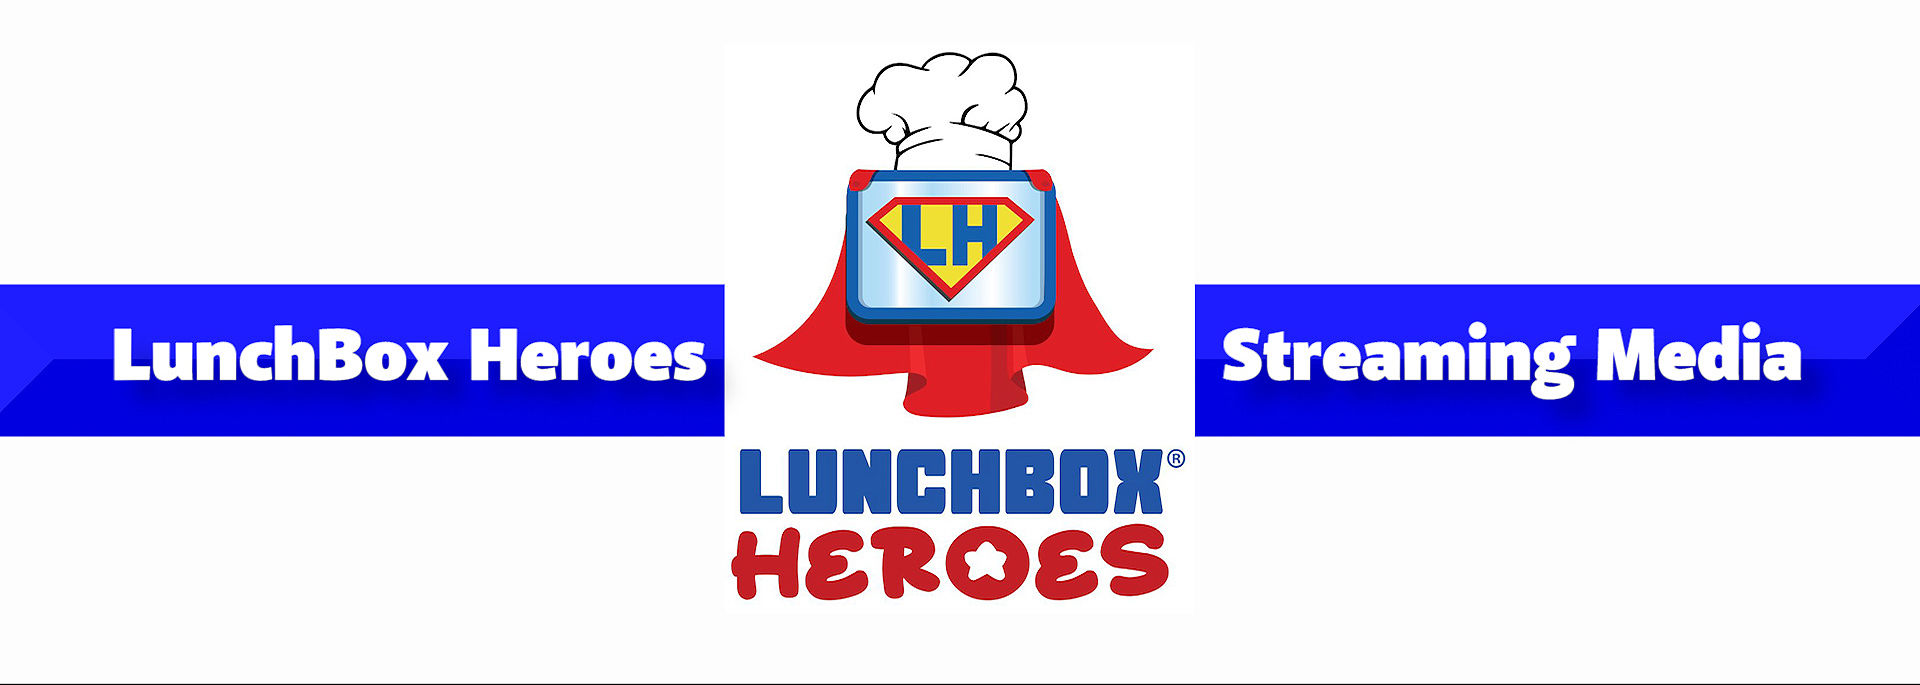 LUNCHBOX HEROES